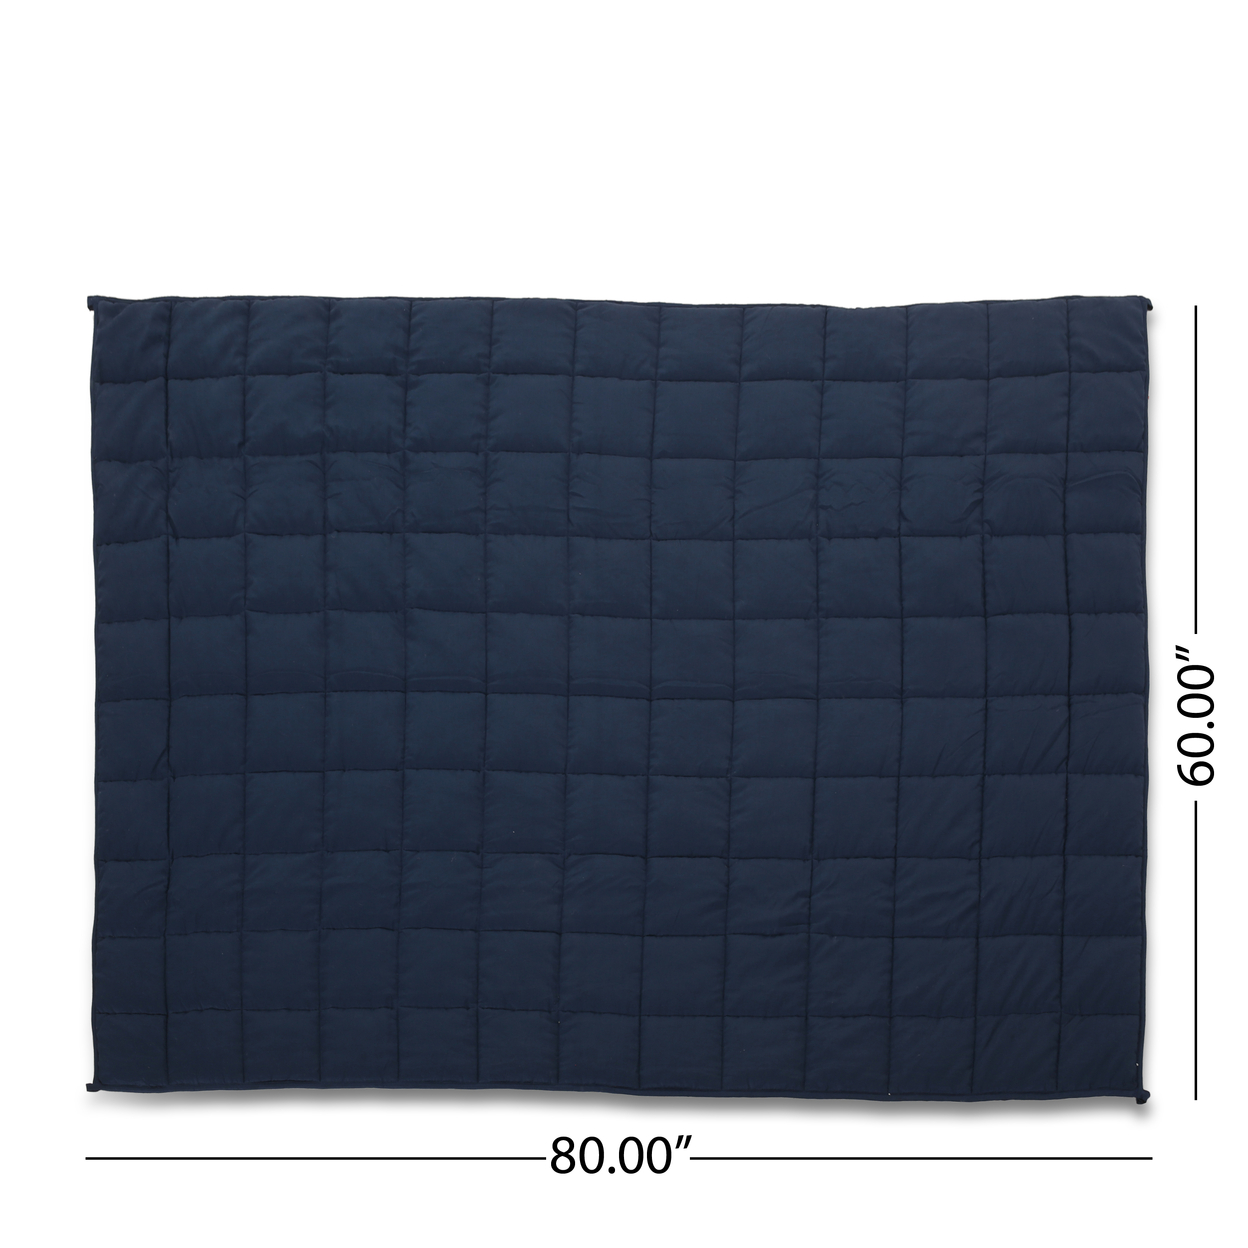 OkiOki Cotton Weighted Blanket - Navy Blue(15 Lbs)